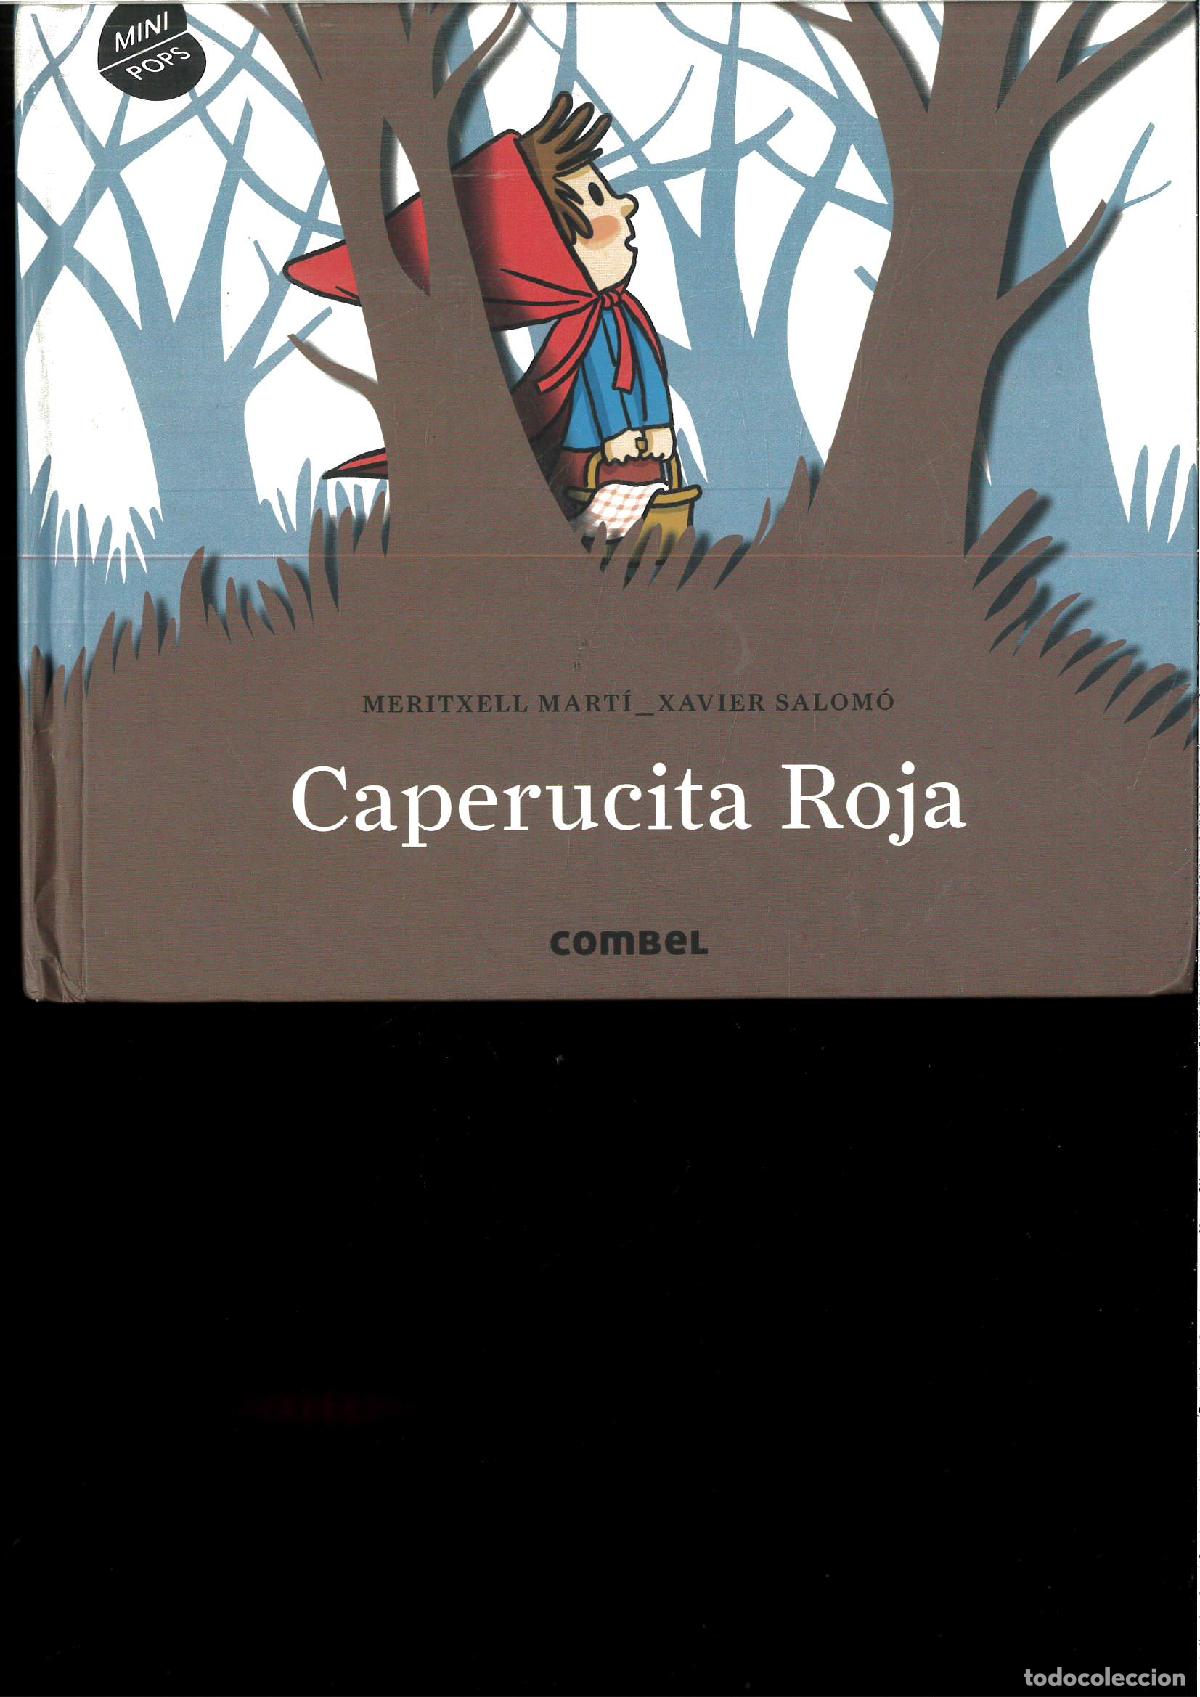 Caperucita roja (Spanish Edition)